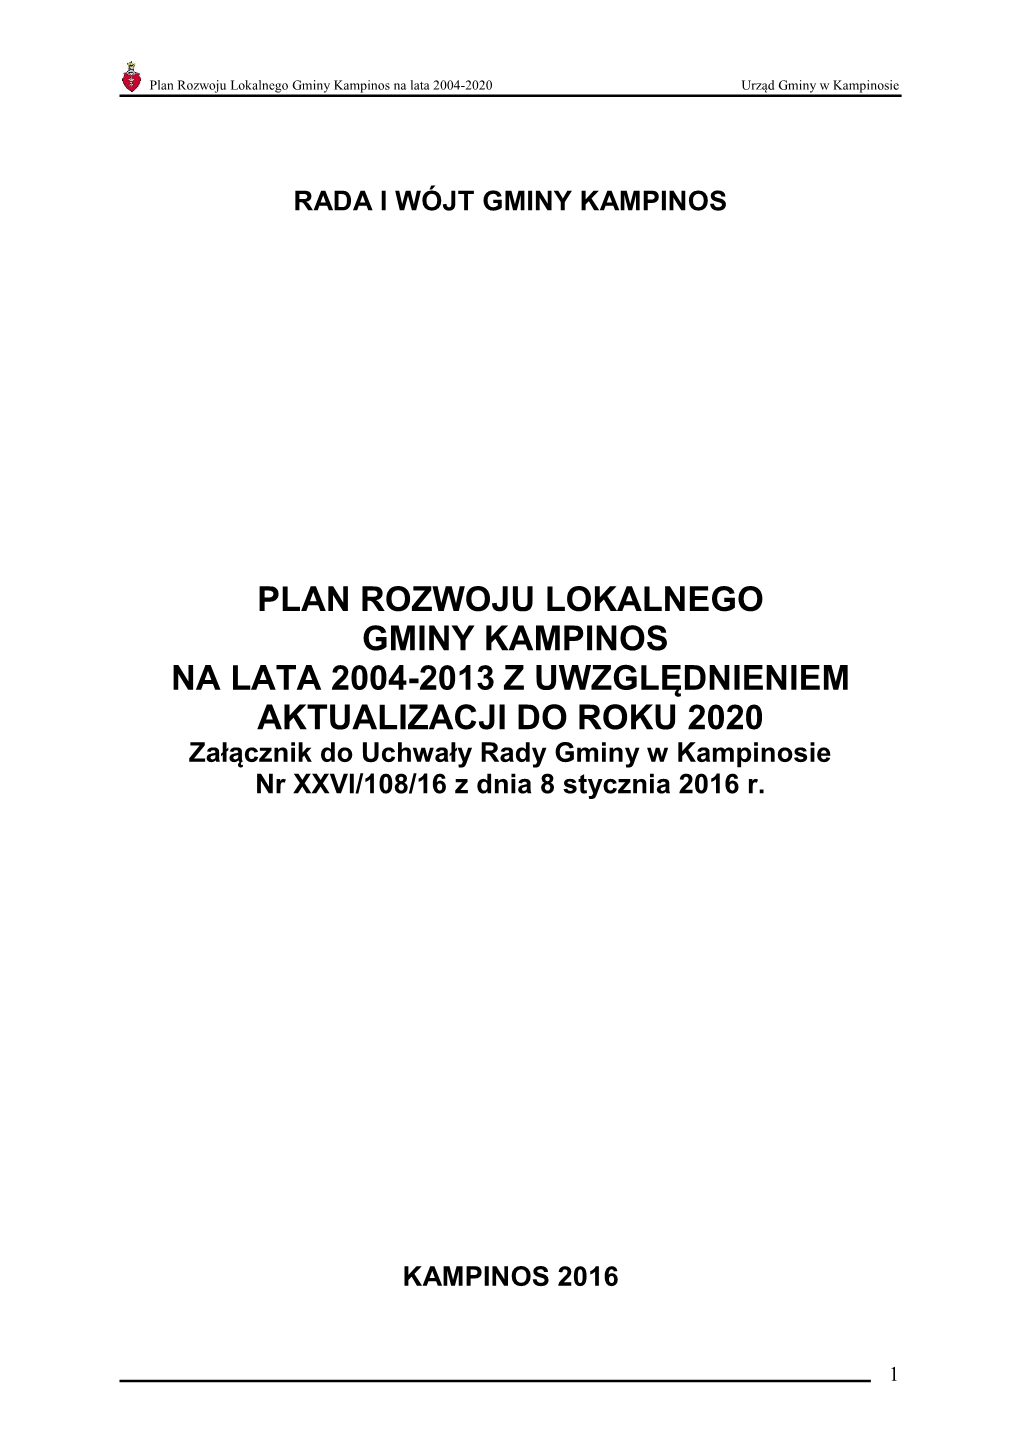 Plan Rozwoju Lokalnego Gminy Kampinos Na Lata 2004-2013 Z